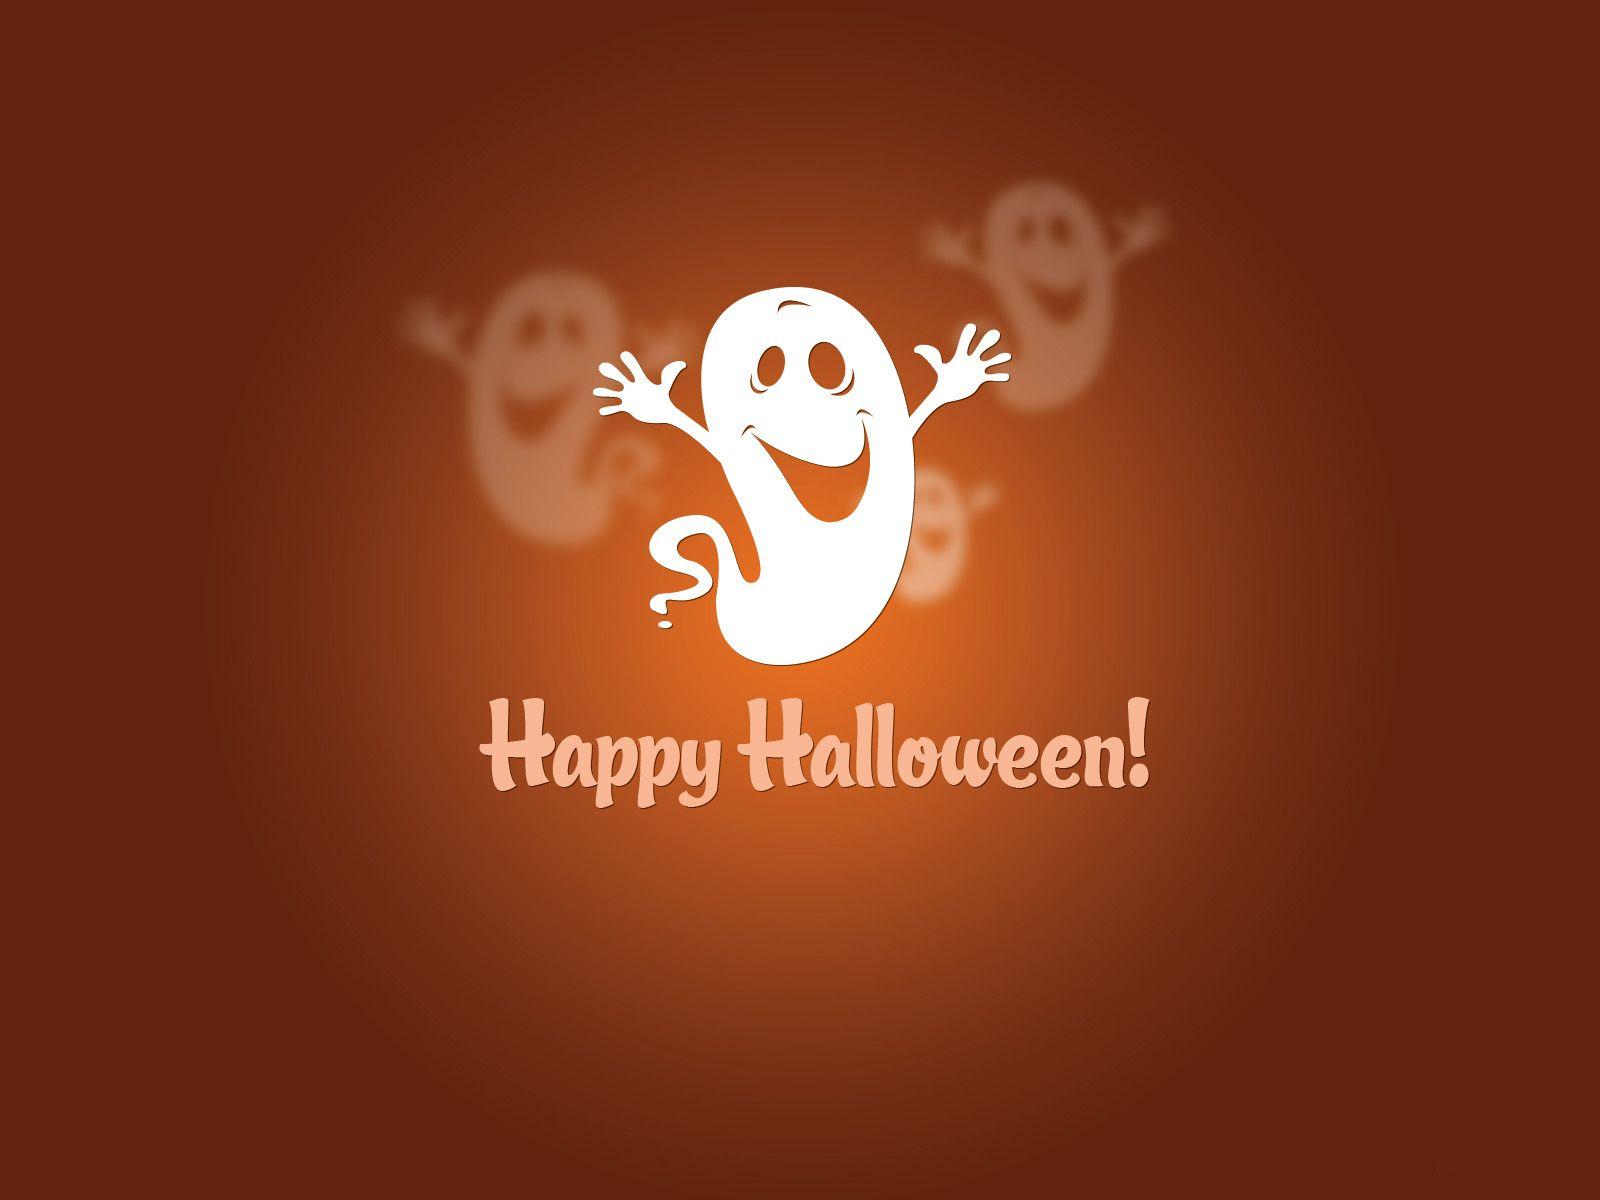 Happy Halloween Desktop Wallpaper FREE on Latoro.com